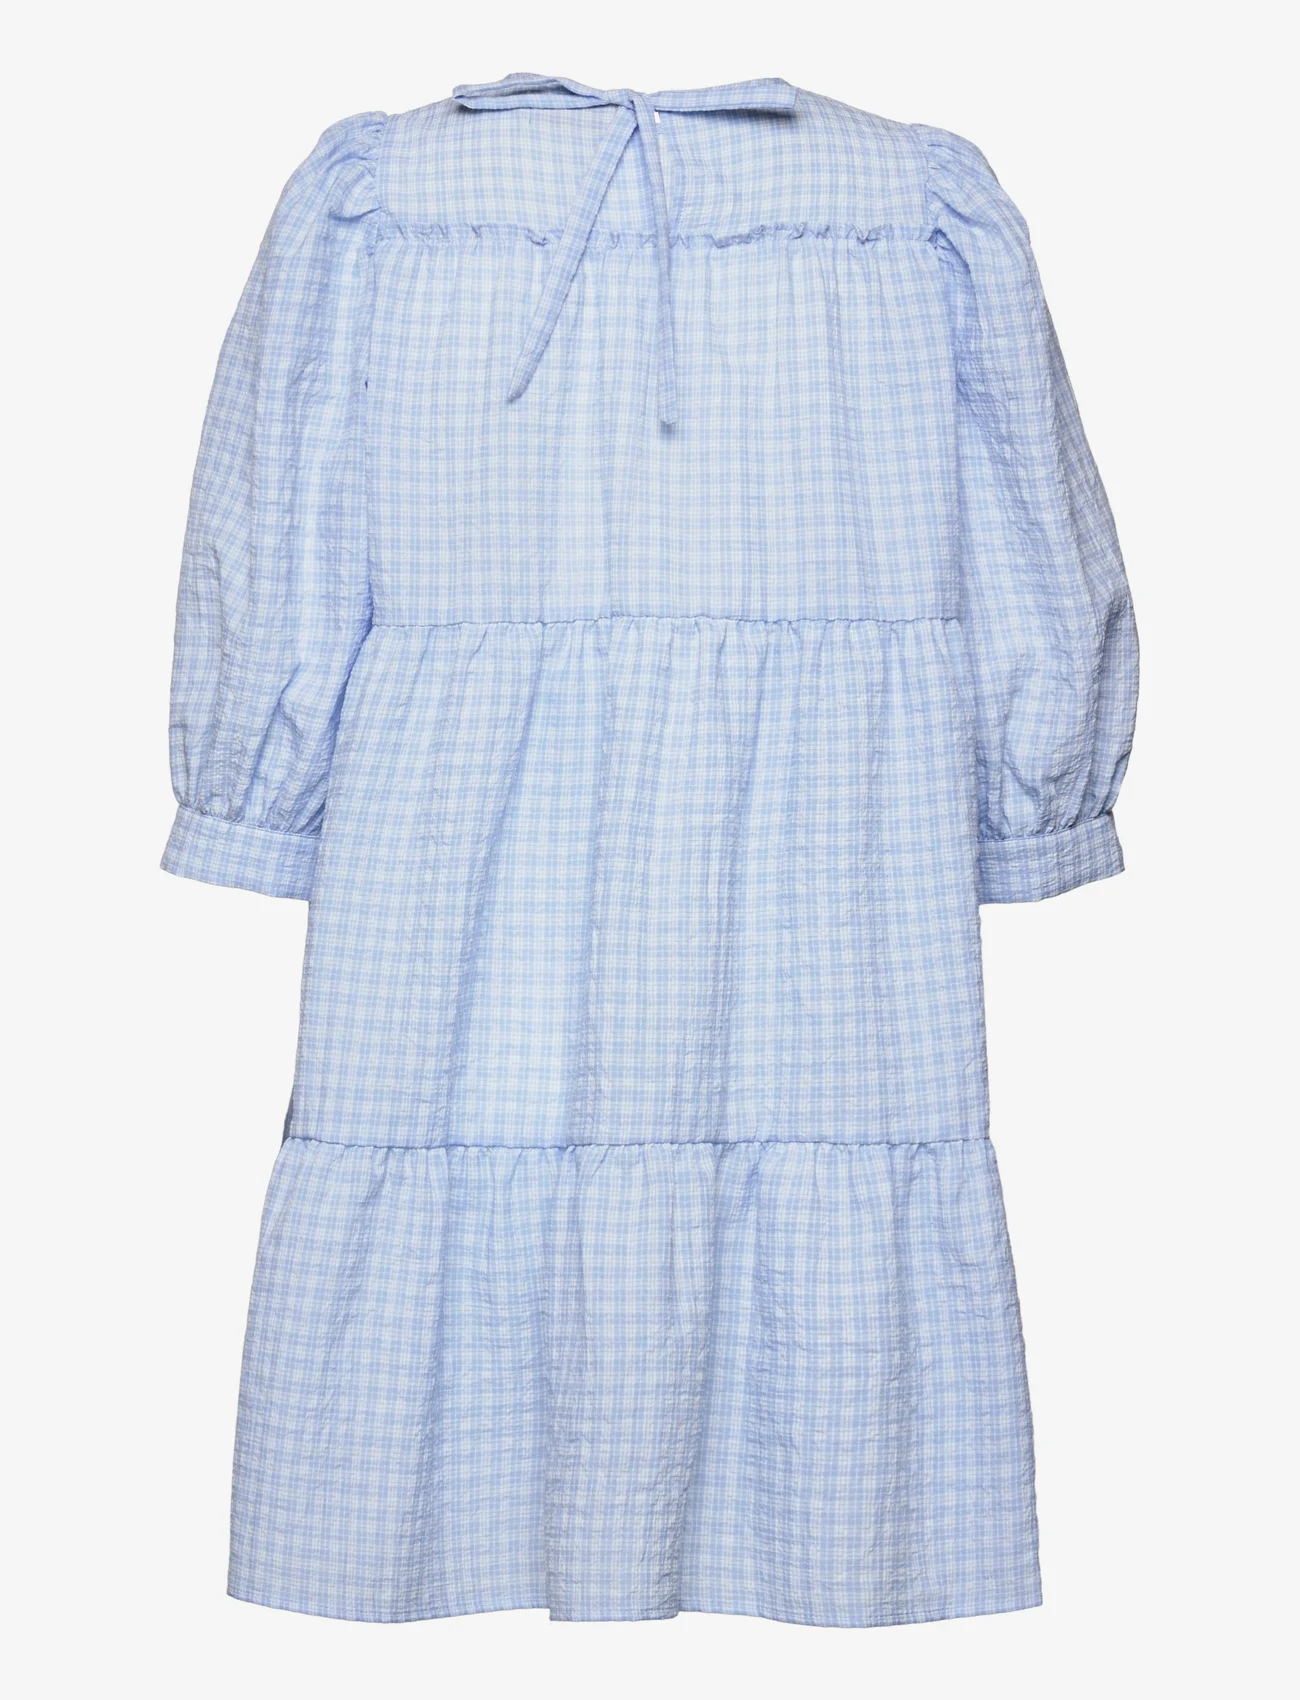 Minus - Rowen kjole - short dresses - blue checked - 1